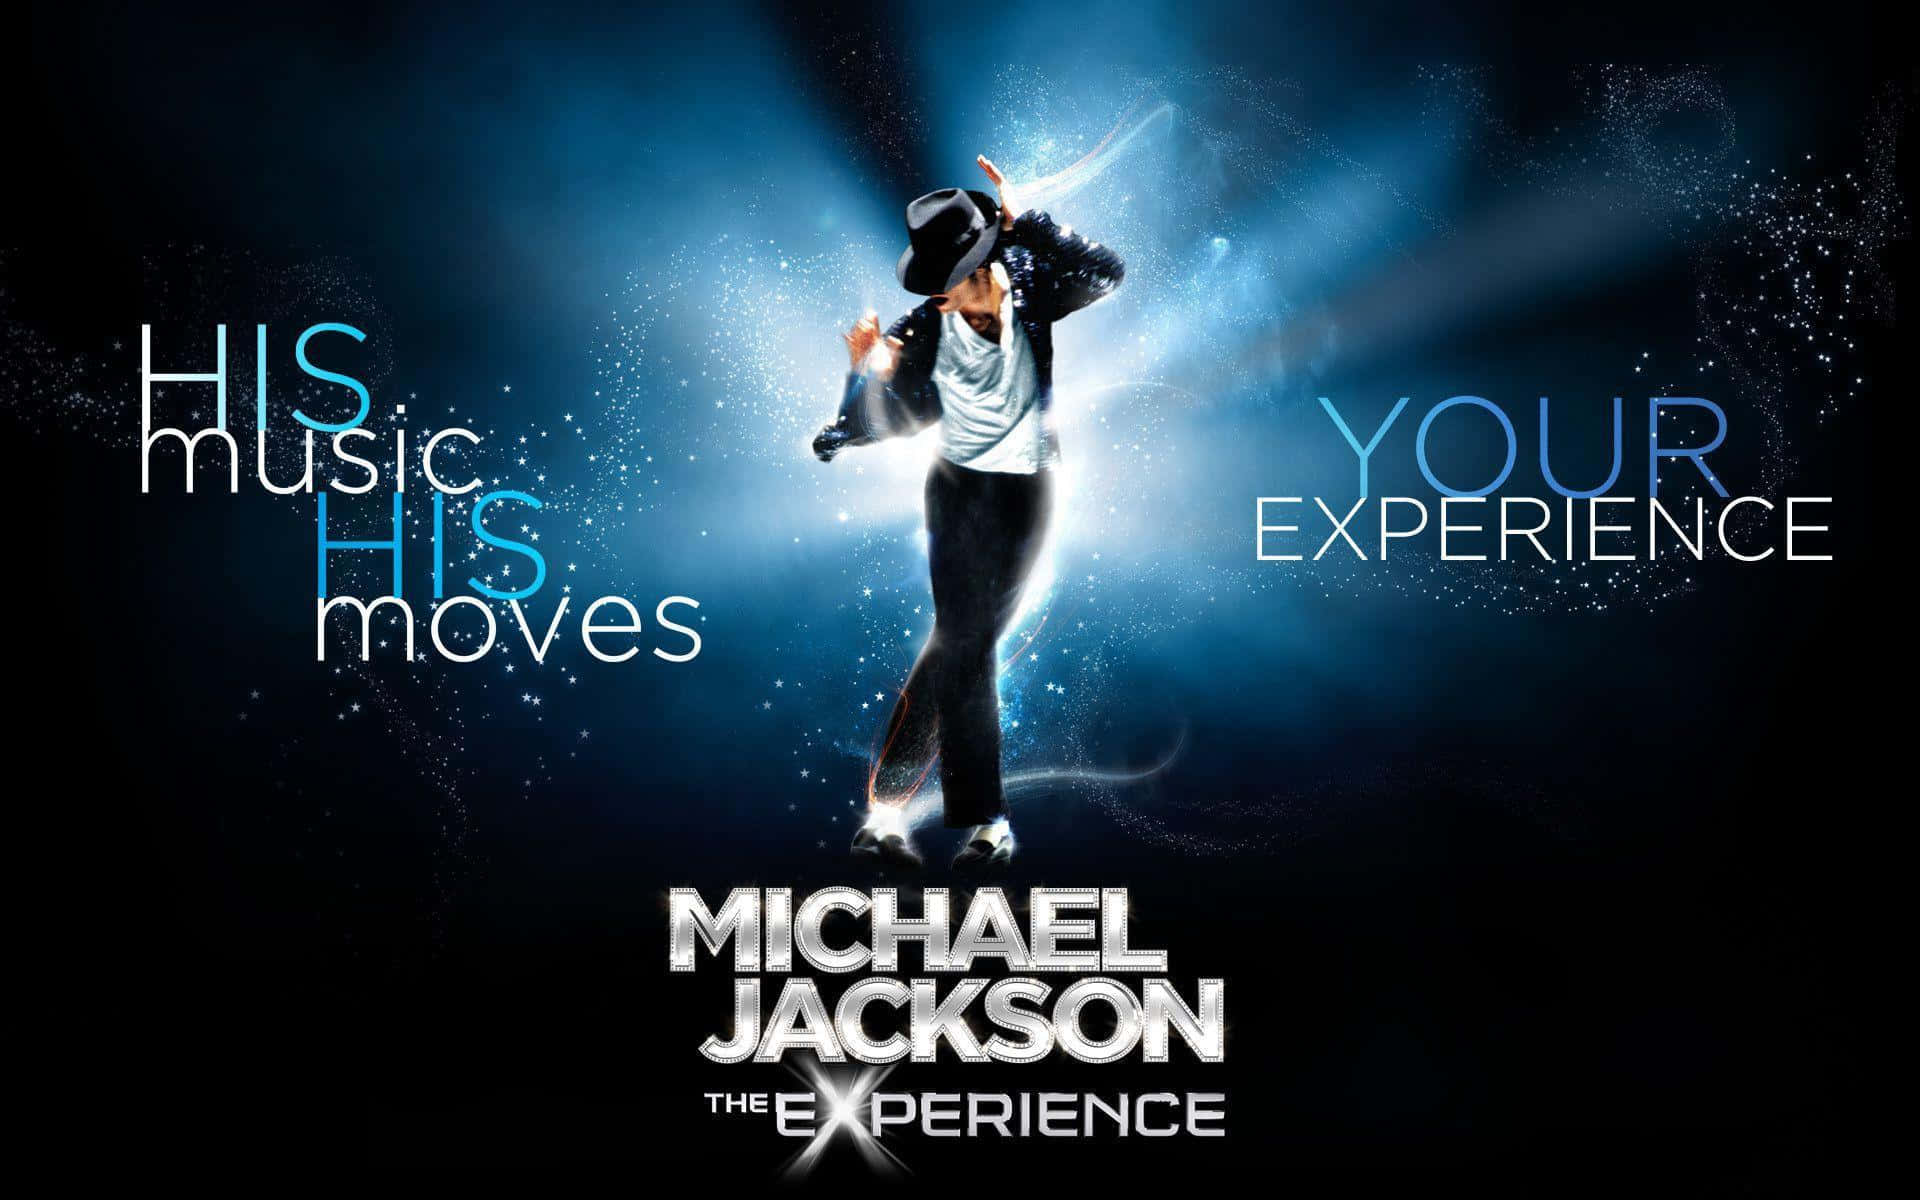 Michael Jackson The Experience Promotional Artwork Wallpaper